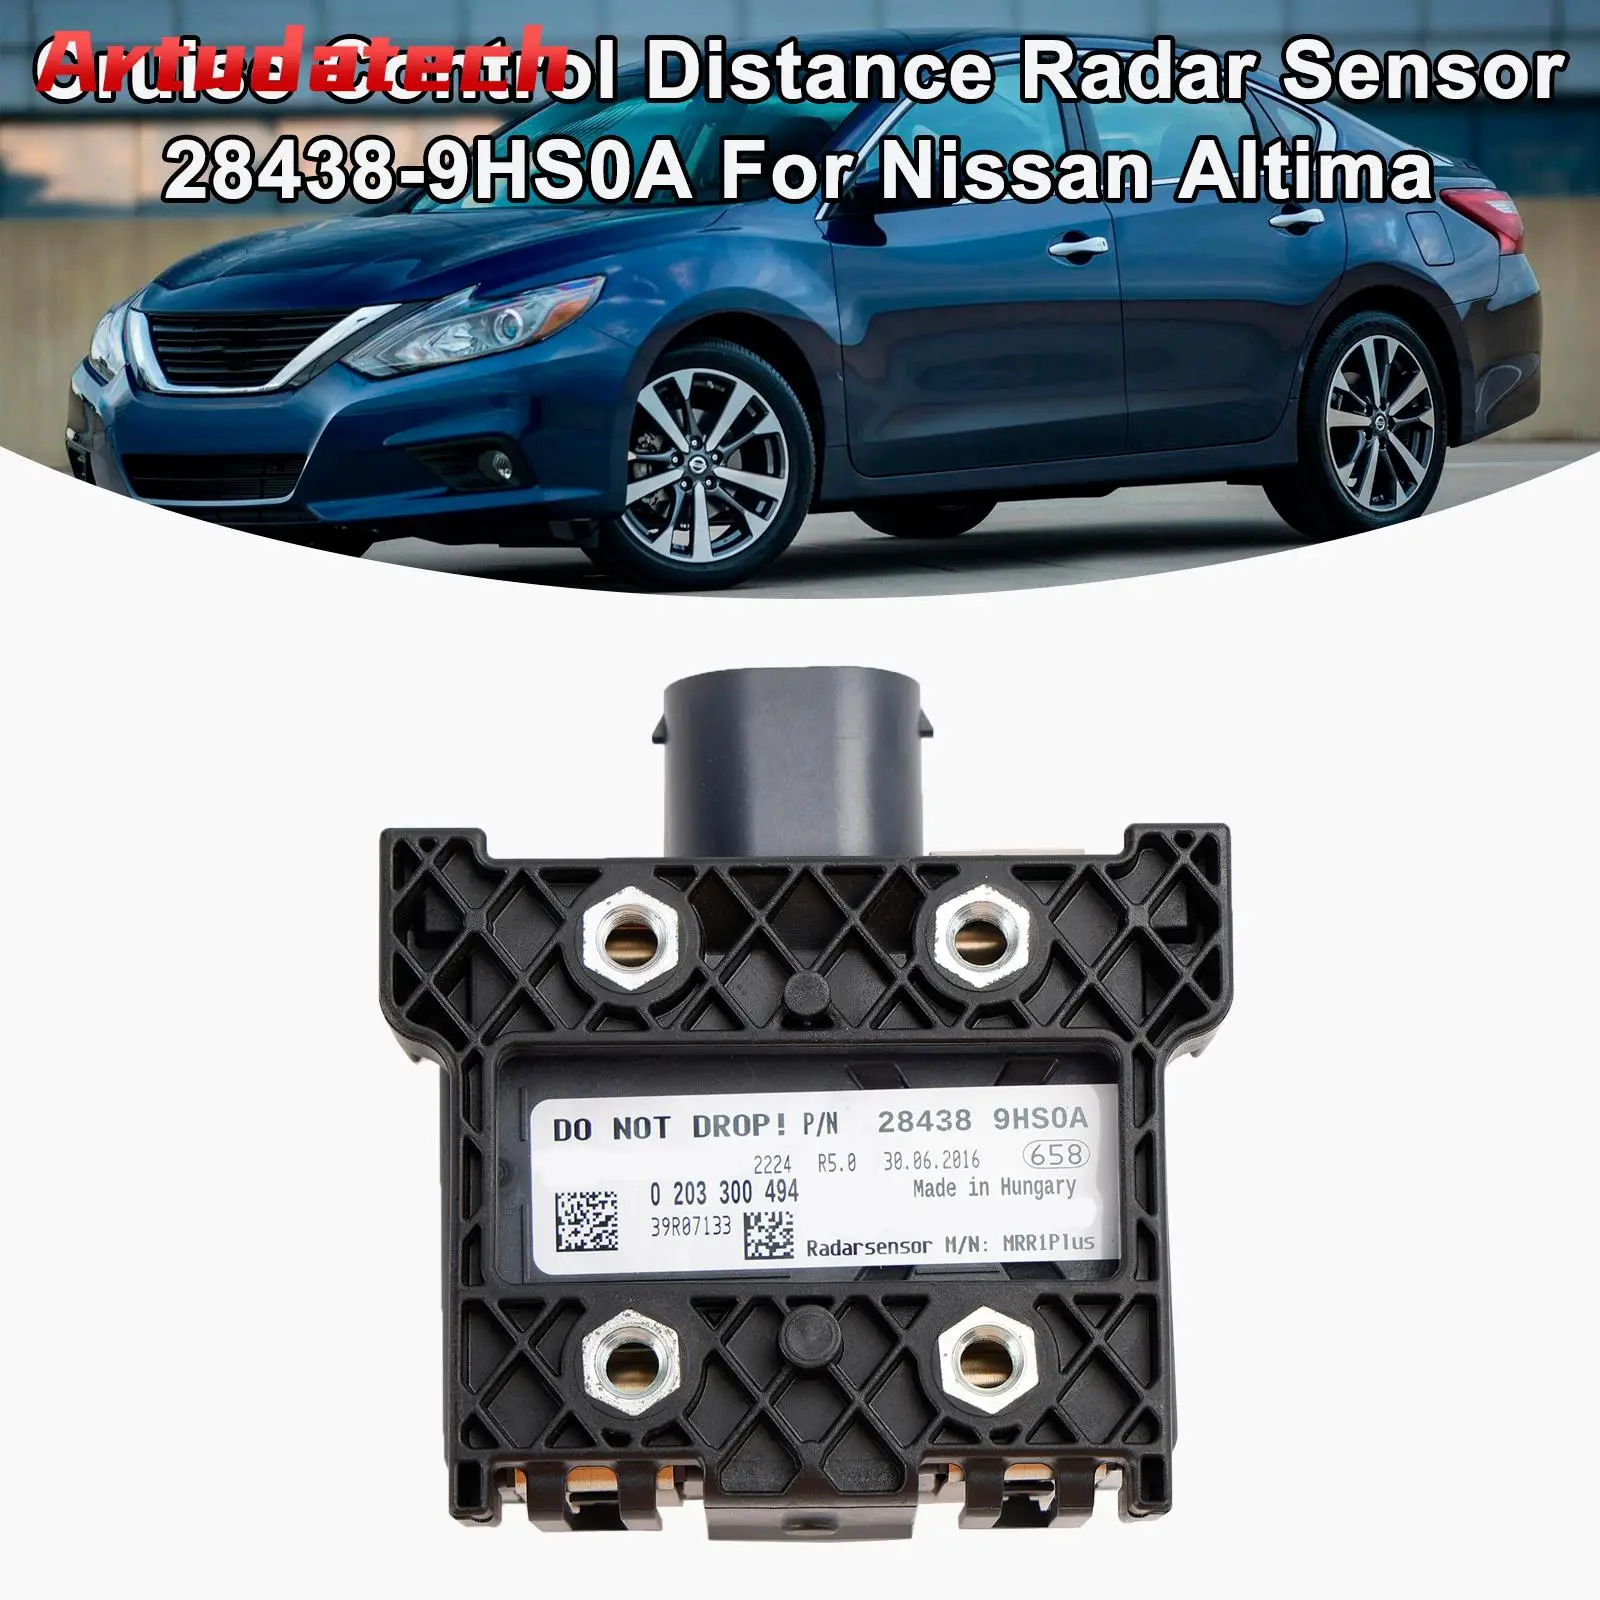 

Artudatech Cruise Control Distance Radar Sensor 28438-9HS0A For Nissan Altima 2016-2018